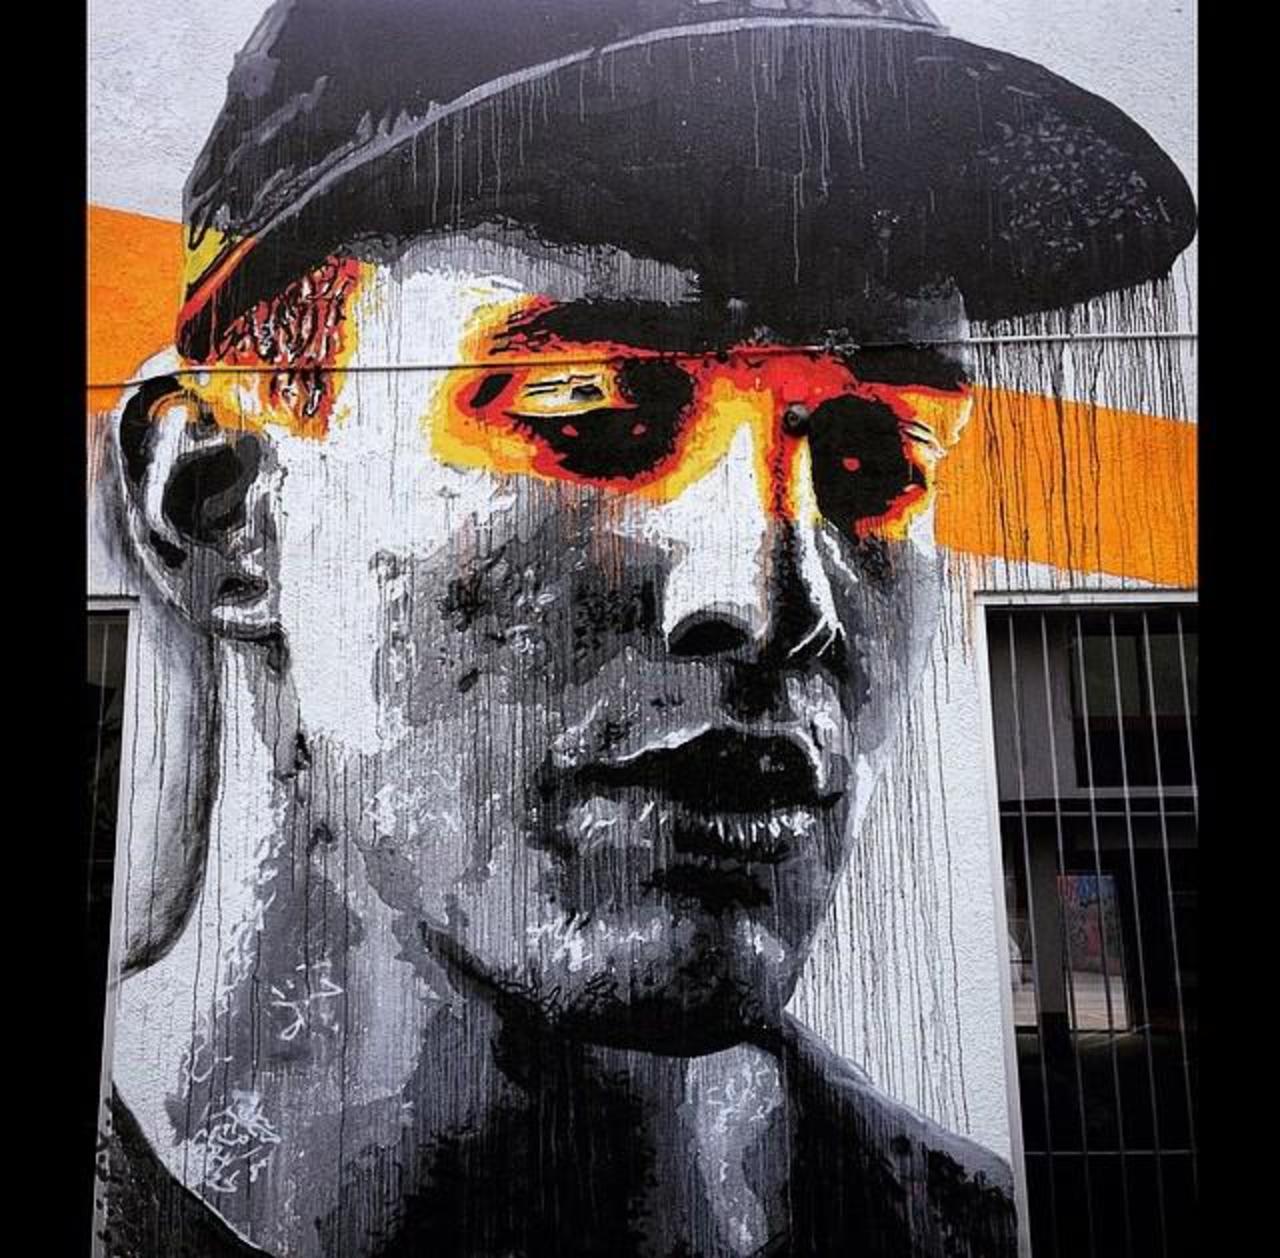 Artist Nils Westergard Street Art portrait in Miami 

#art #graffiti #mural #streetart http://t.co/r80JWShnHi